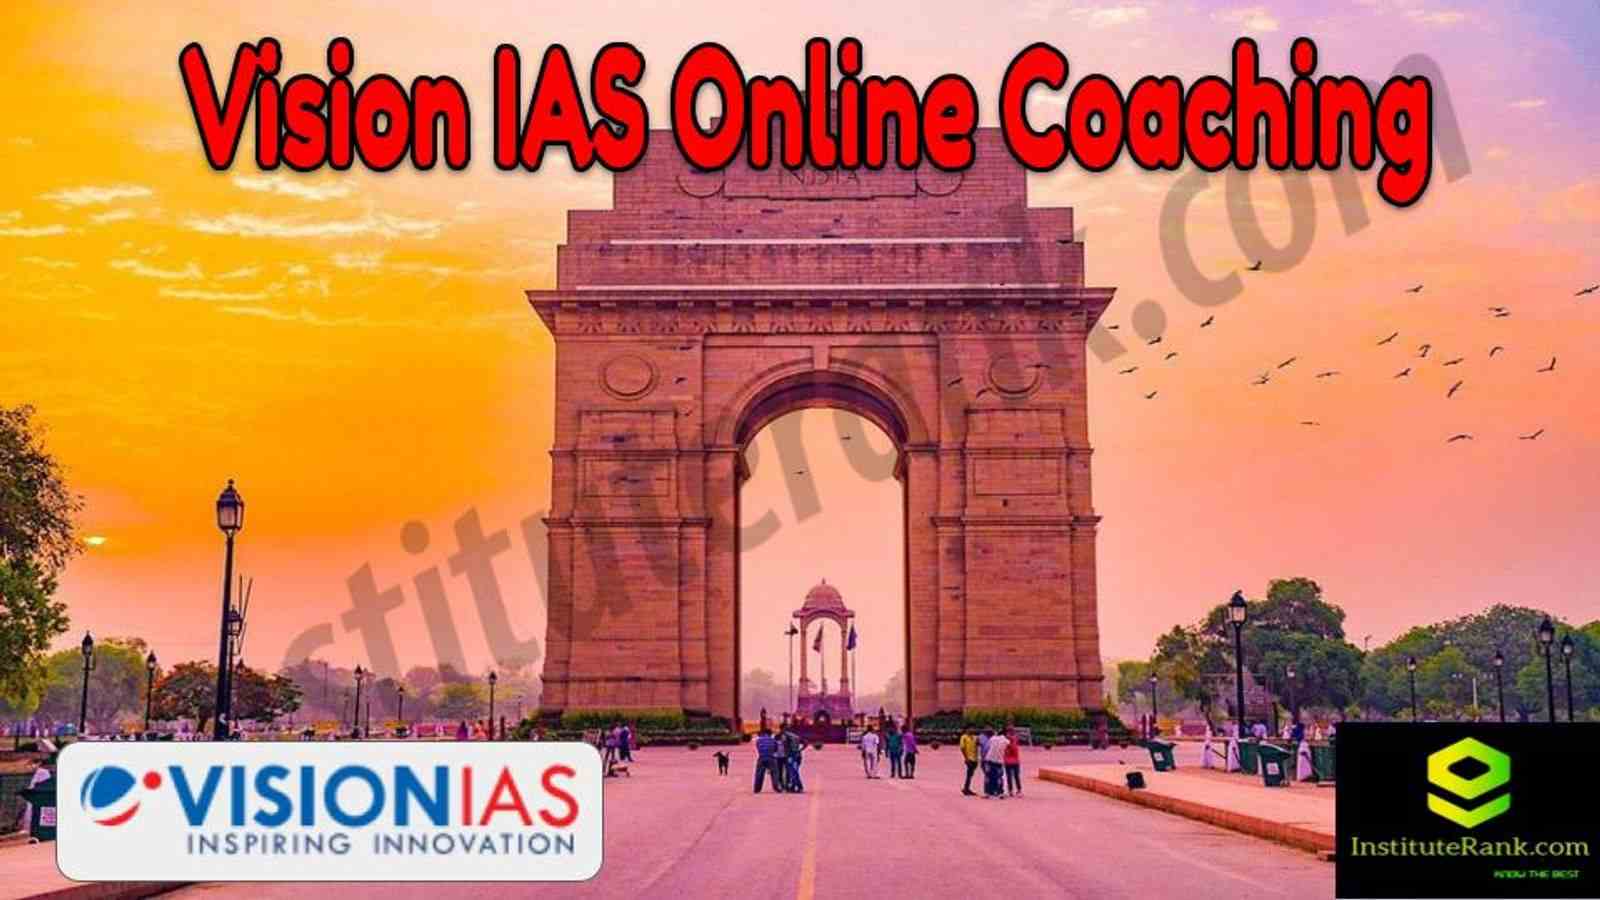 Vision IAS Online Coaching Center